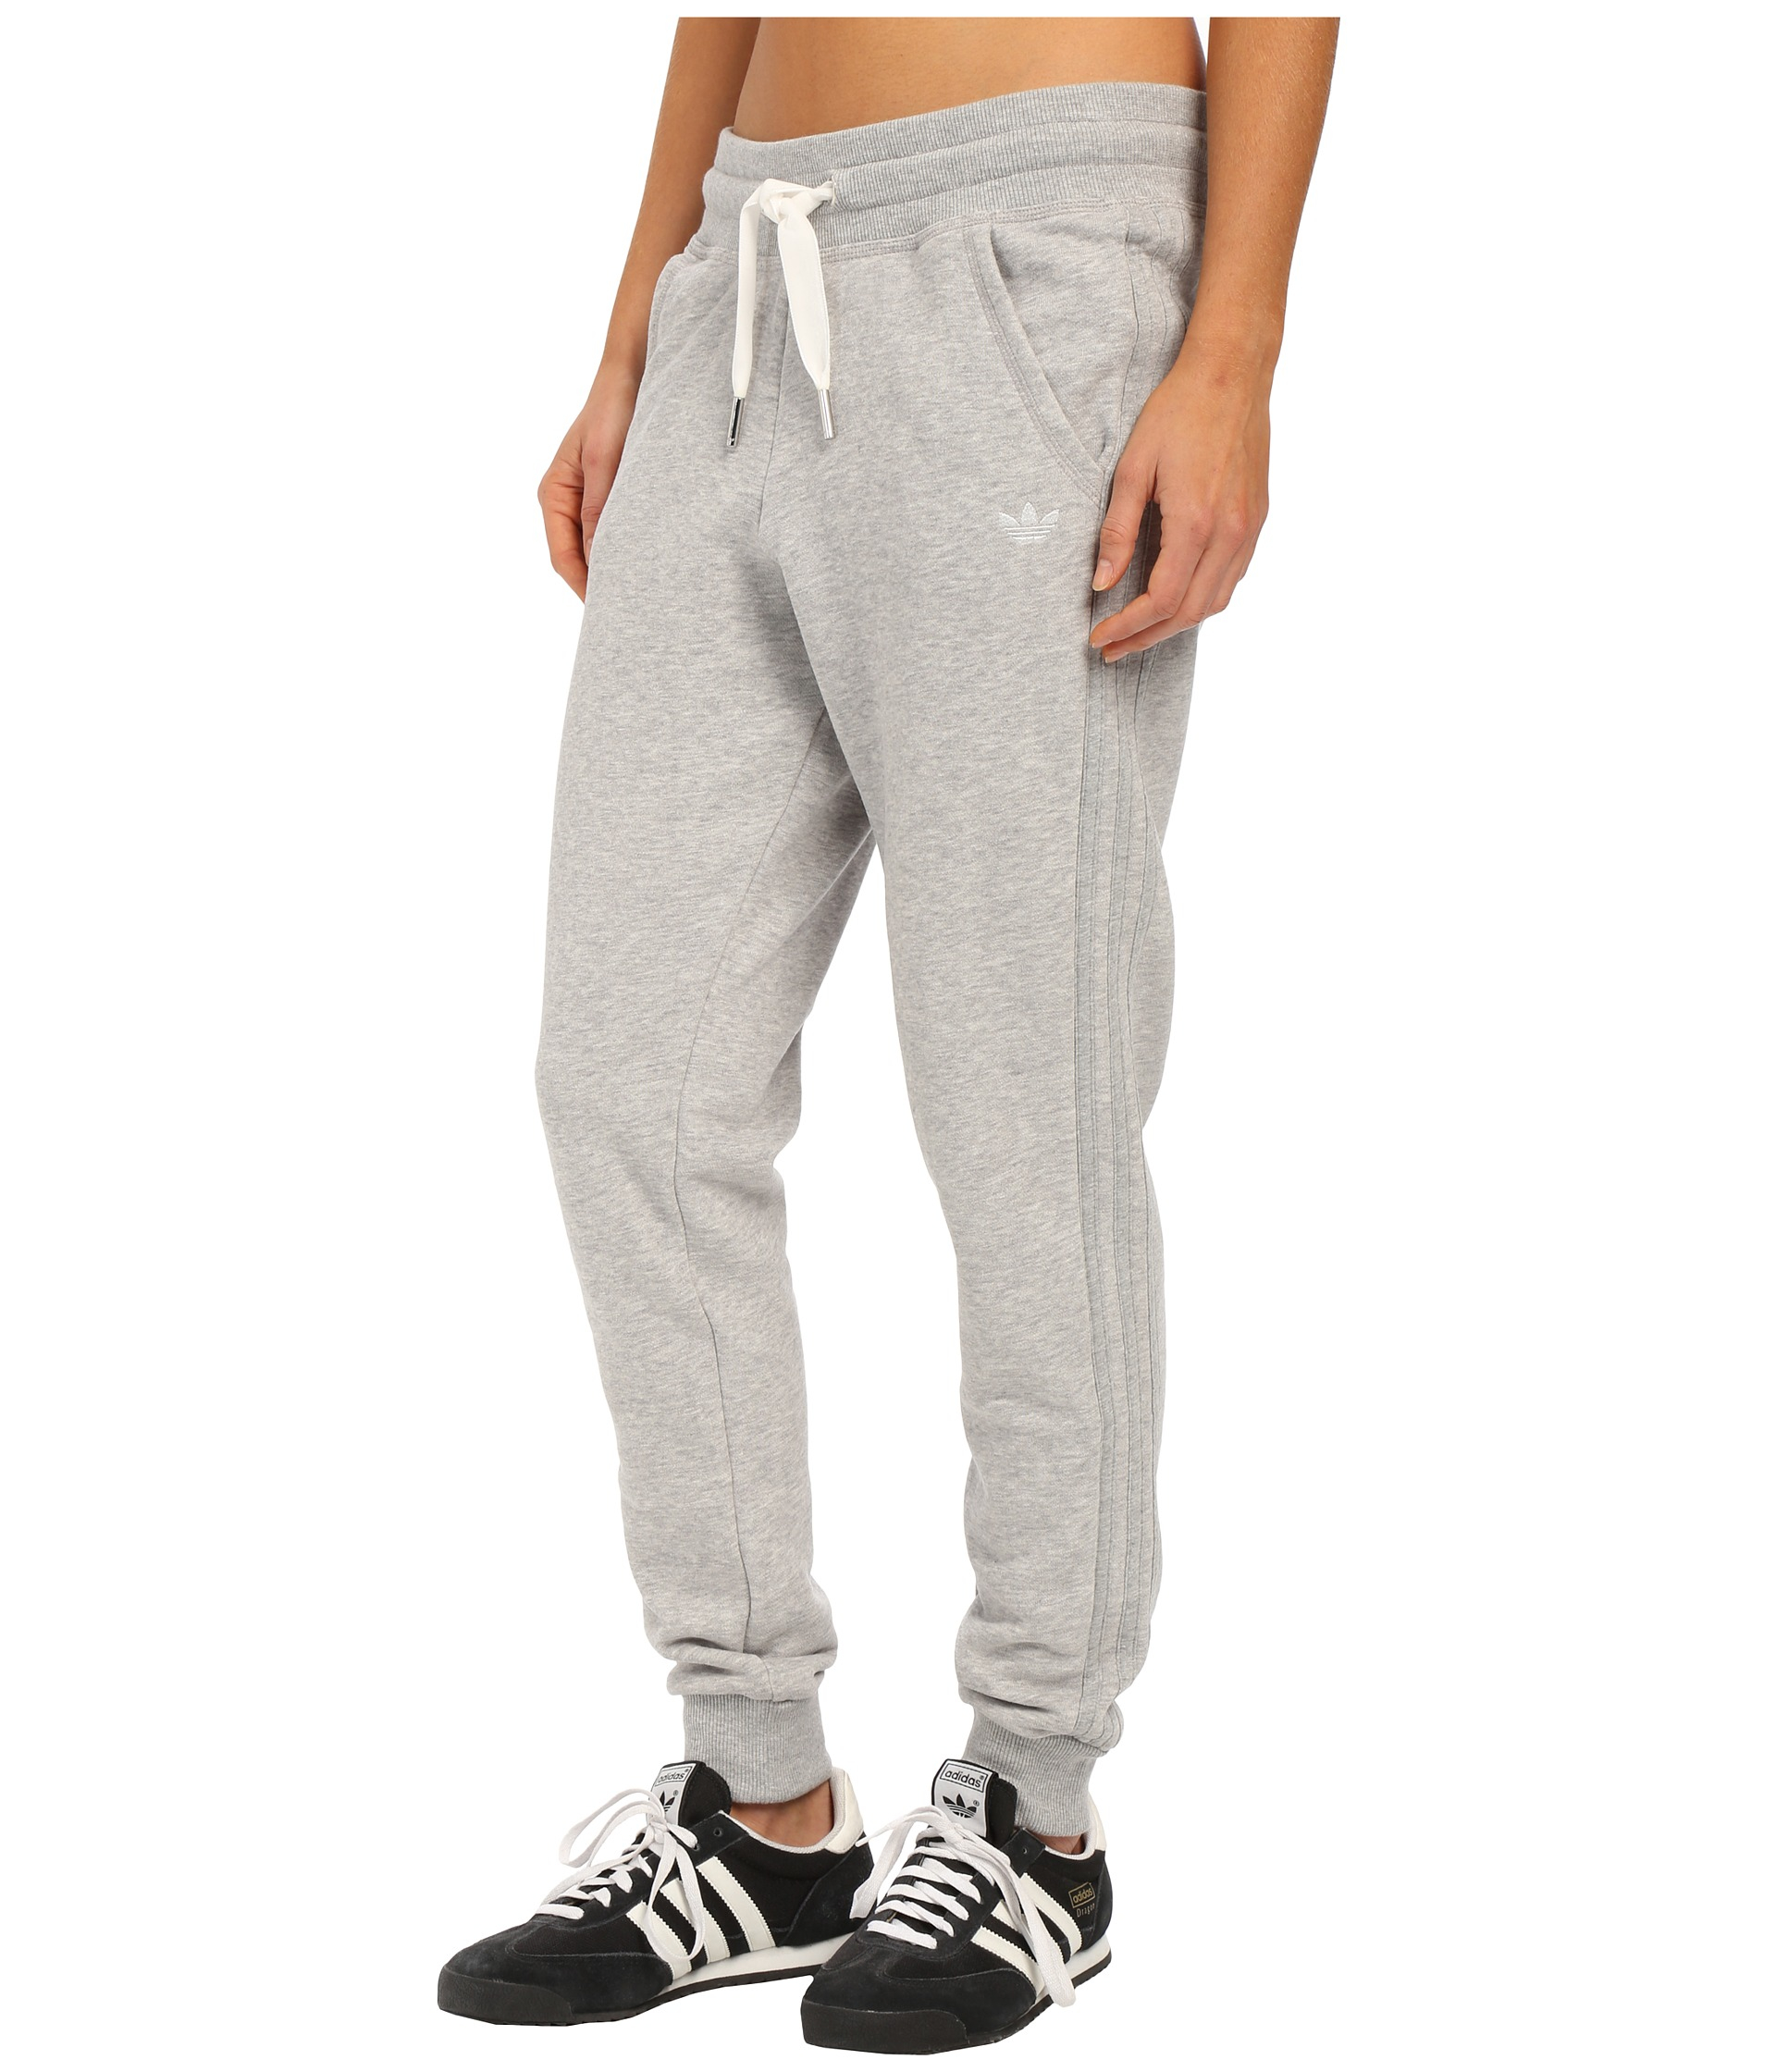 Lyst - Adidas Originals Slim Cuffed Track Pants in Gray for Men